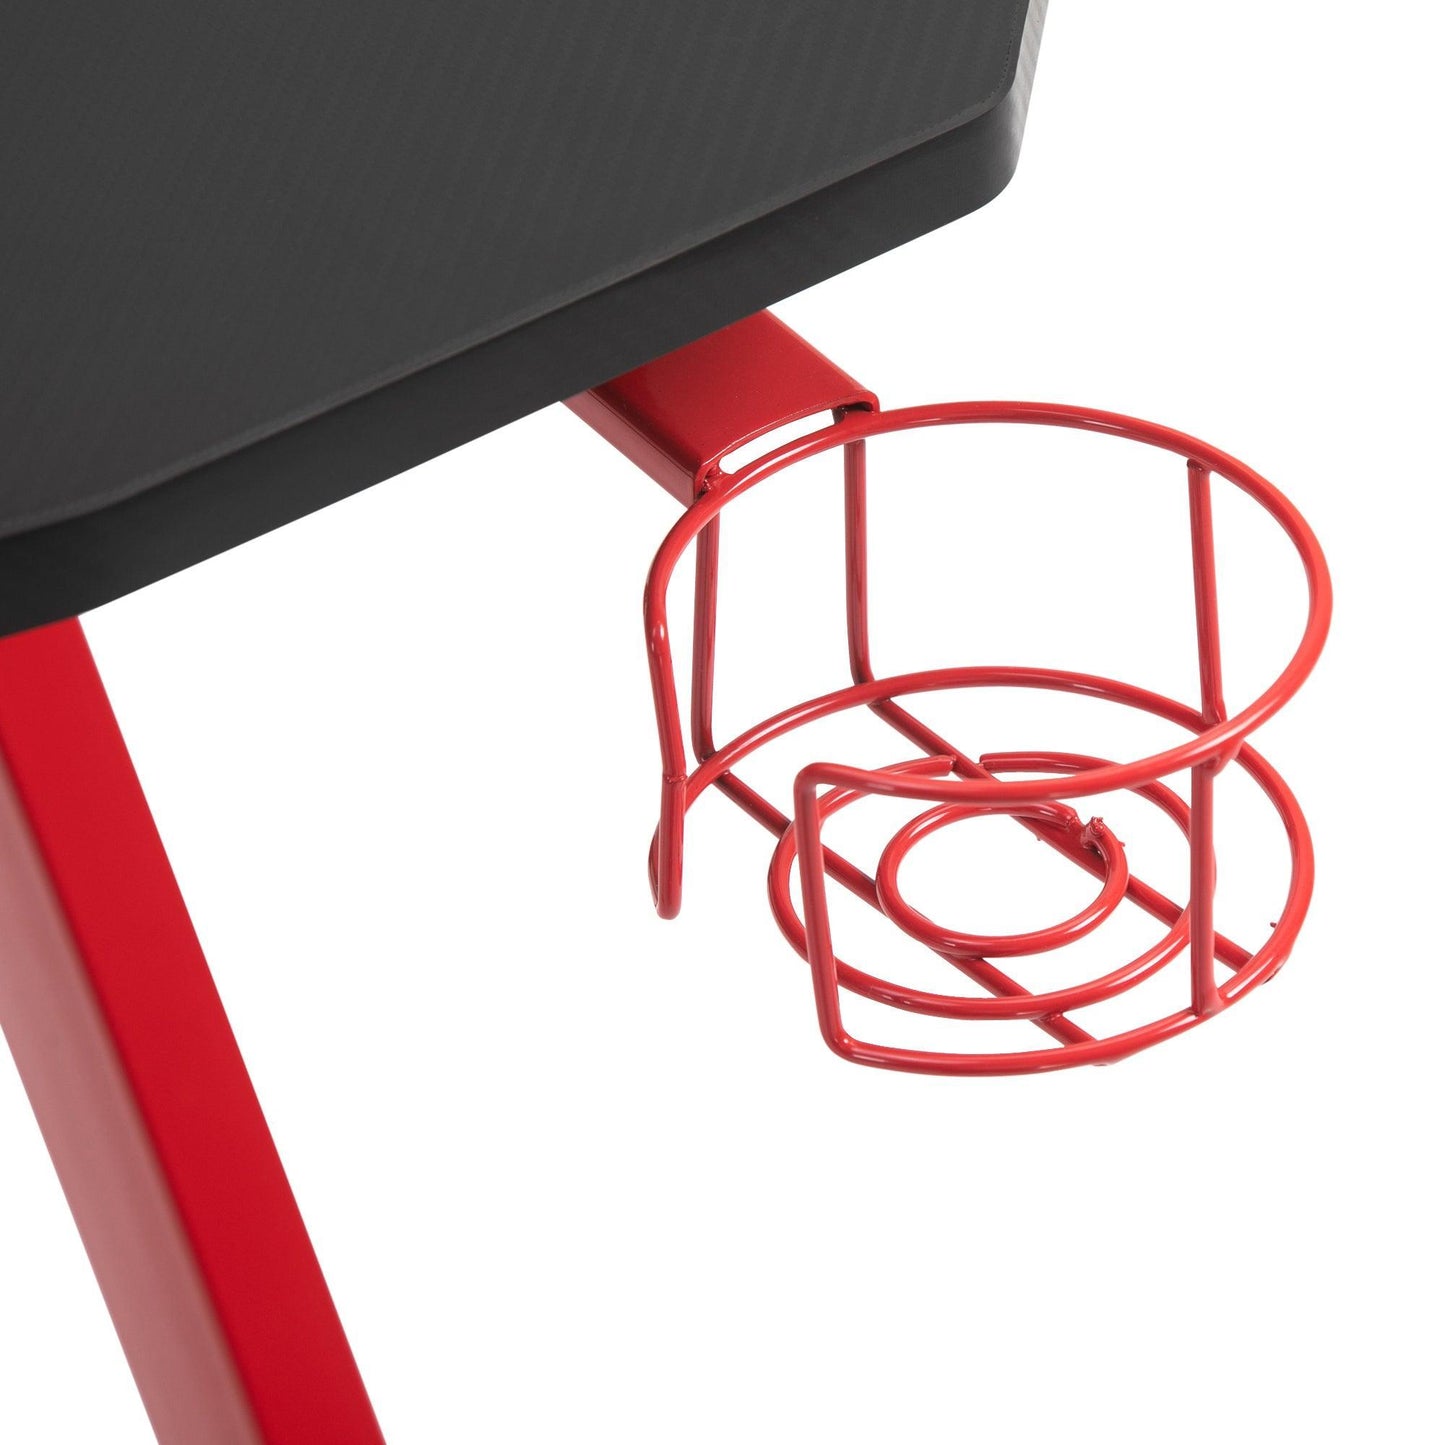 HOMCOM Gaming Desk - Red, Steel Frame, Adjustable Feet - ALL4U RETAILER LTD